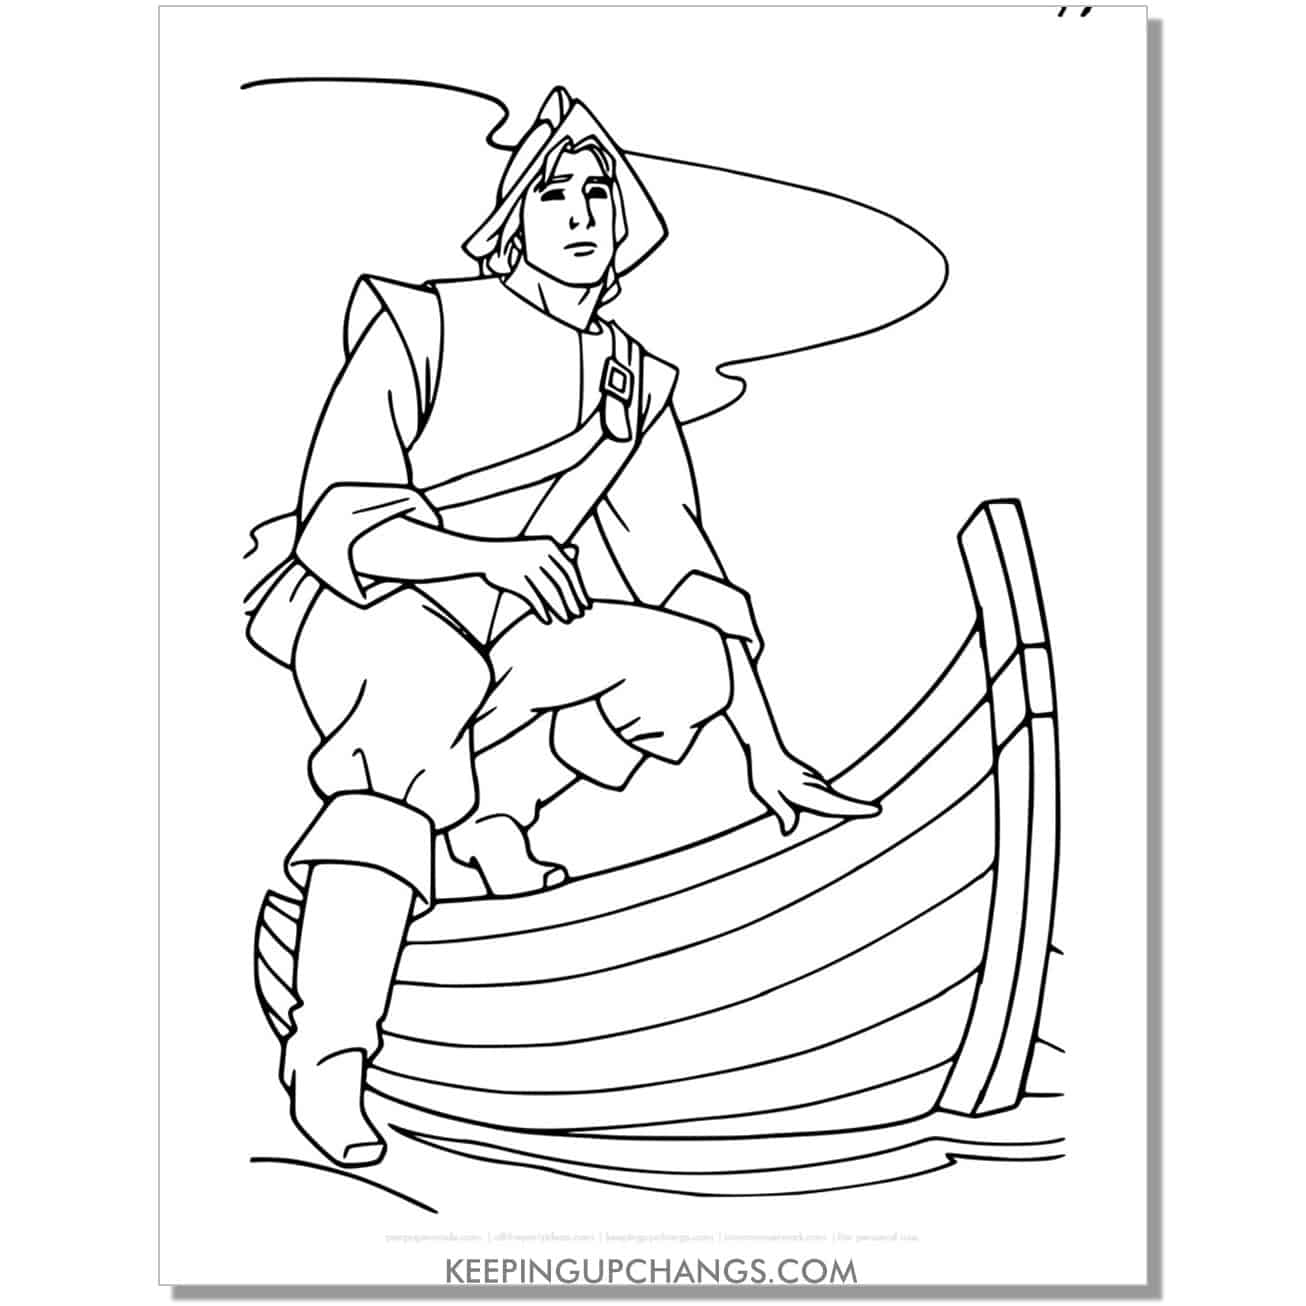 captain john smith landing ship at shore pocahantas coloring page.